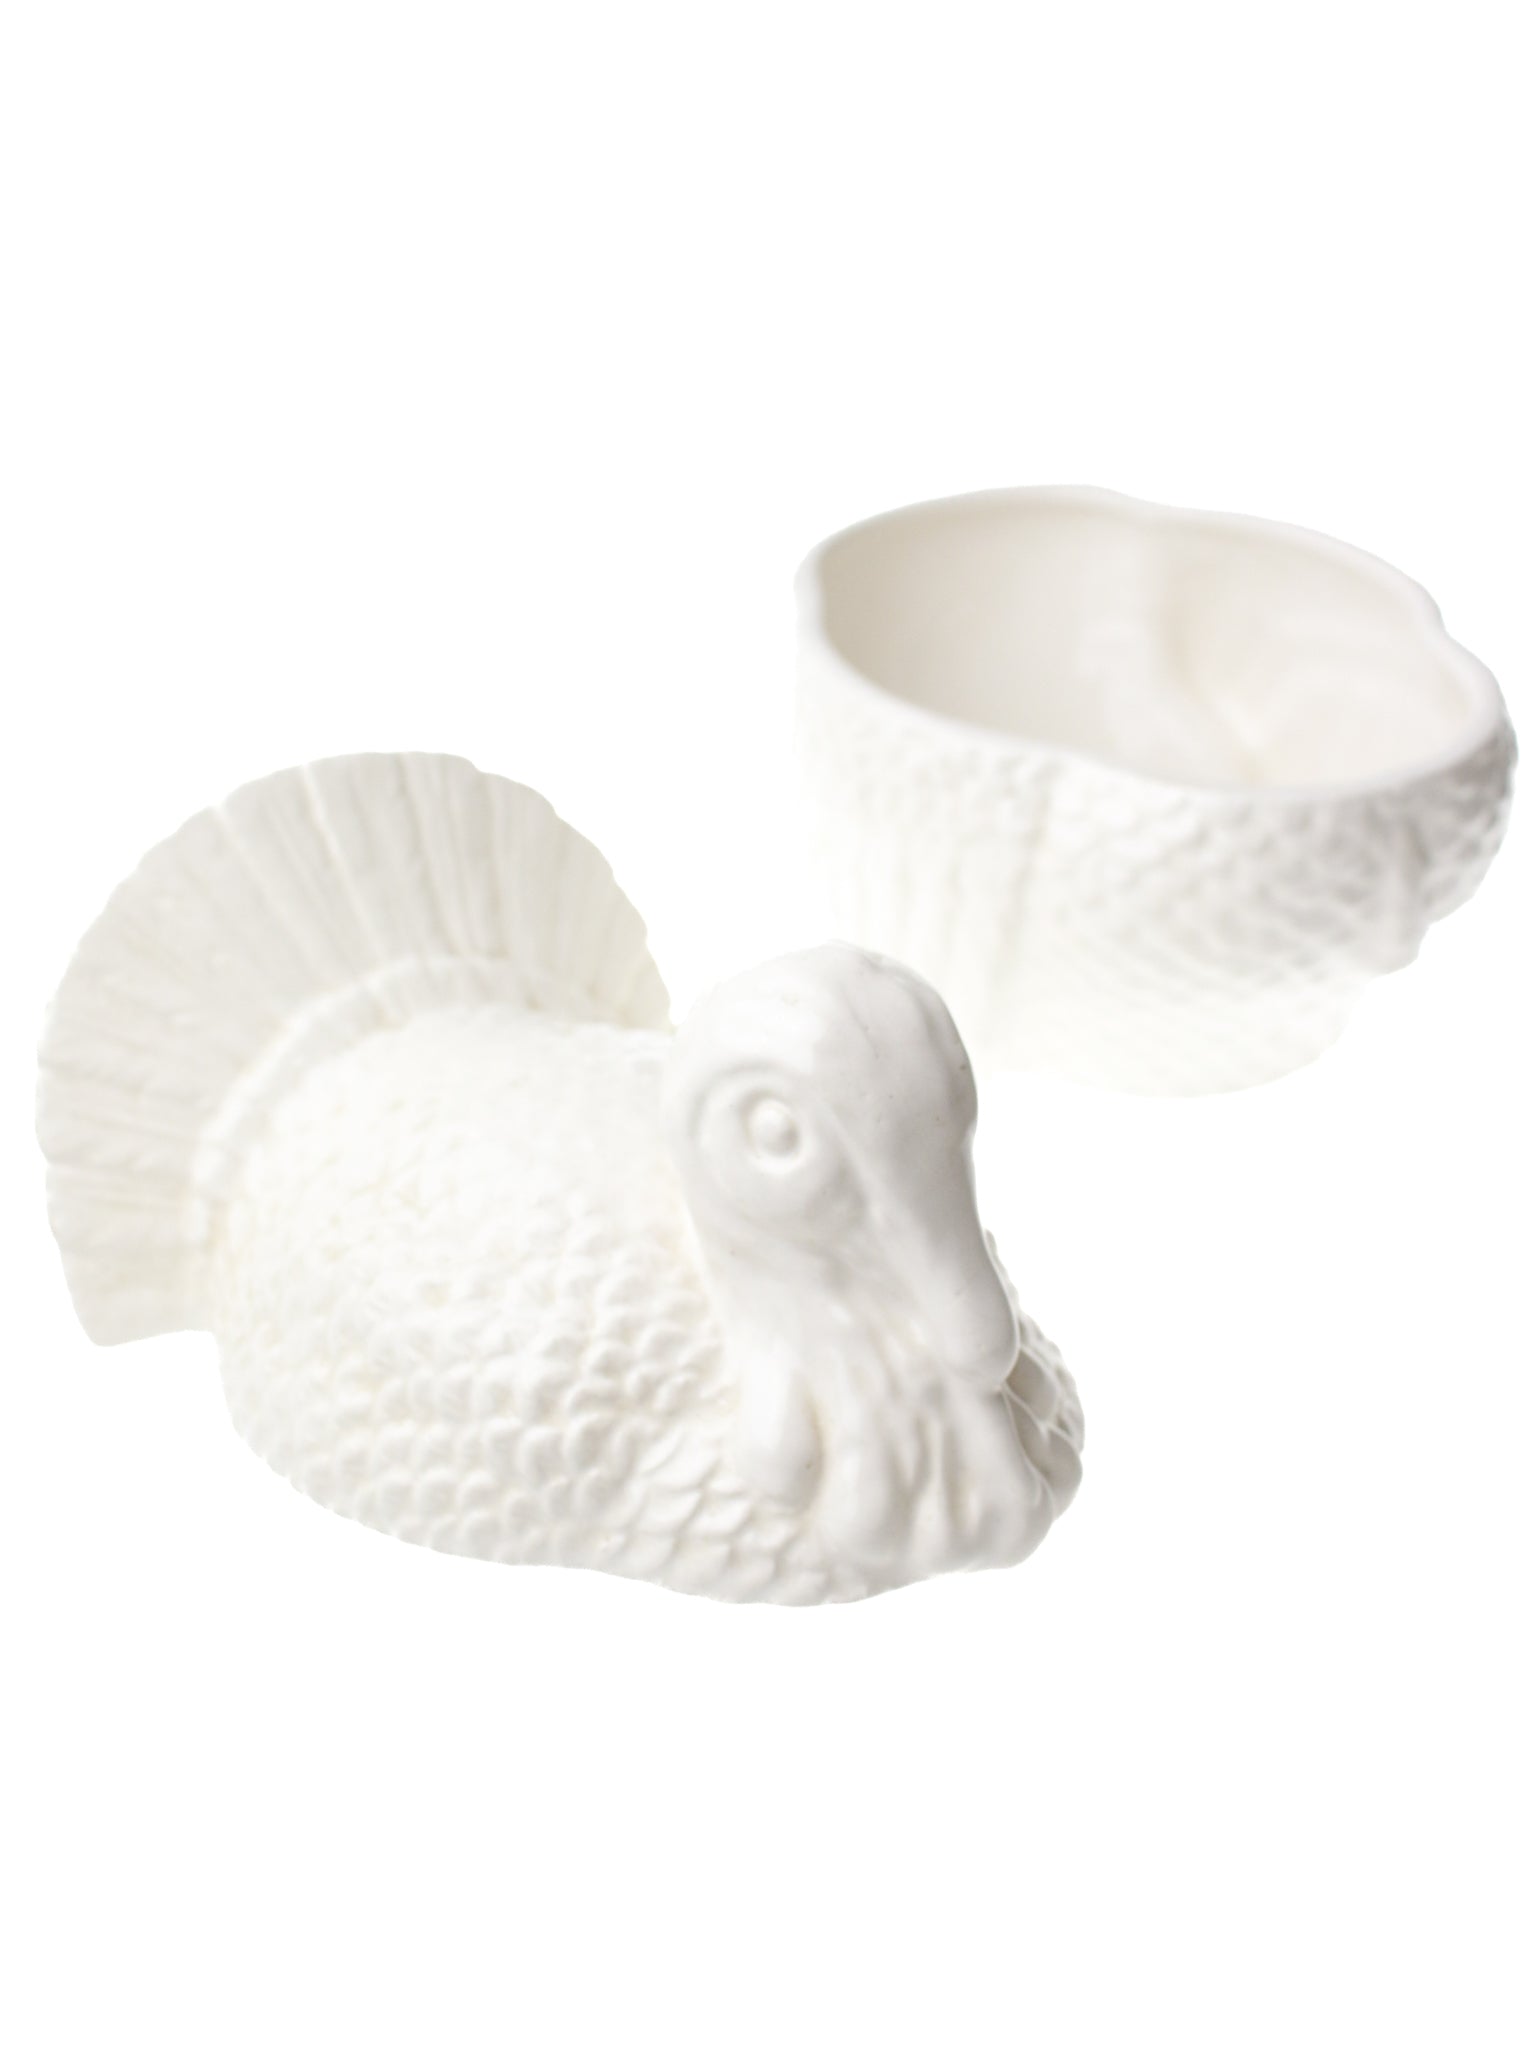 White Ceramic Turkey Covered Serveware